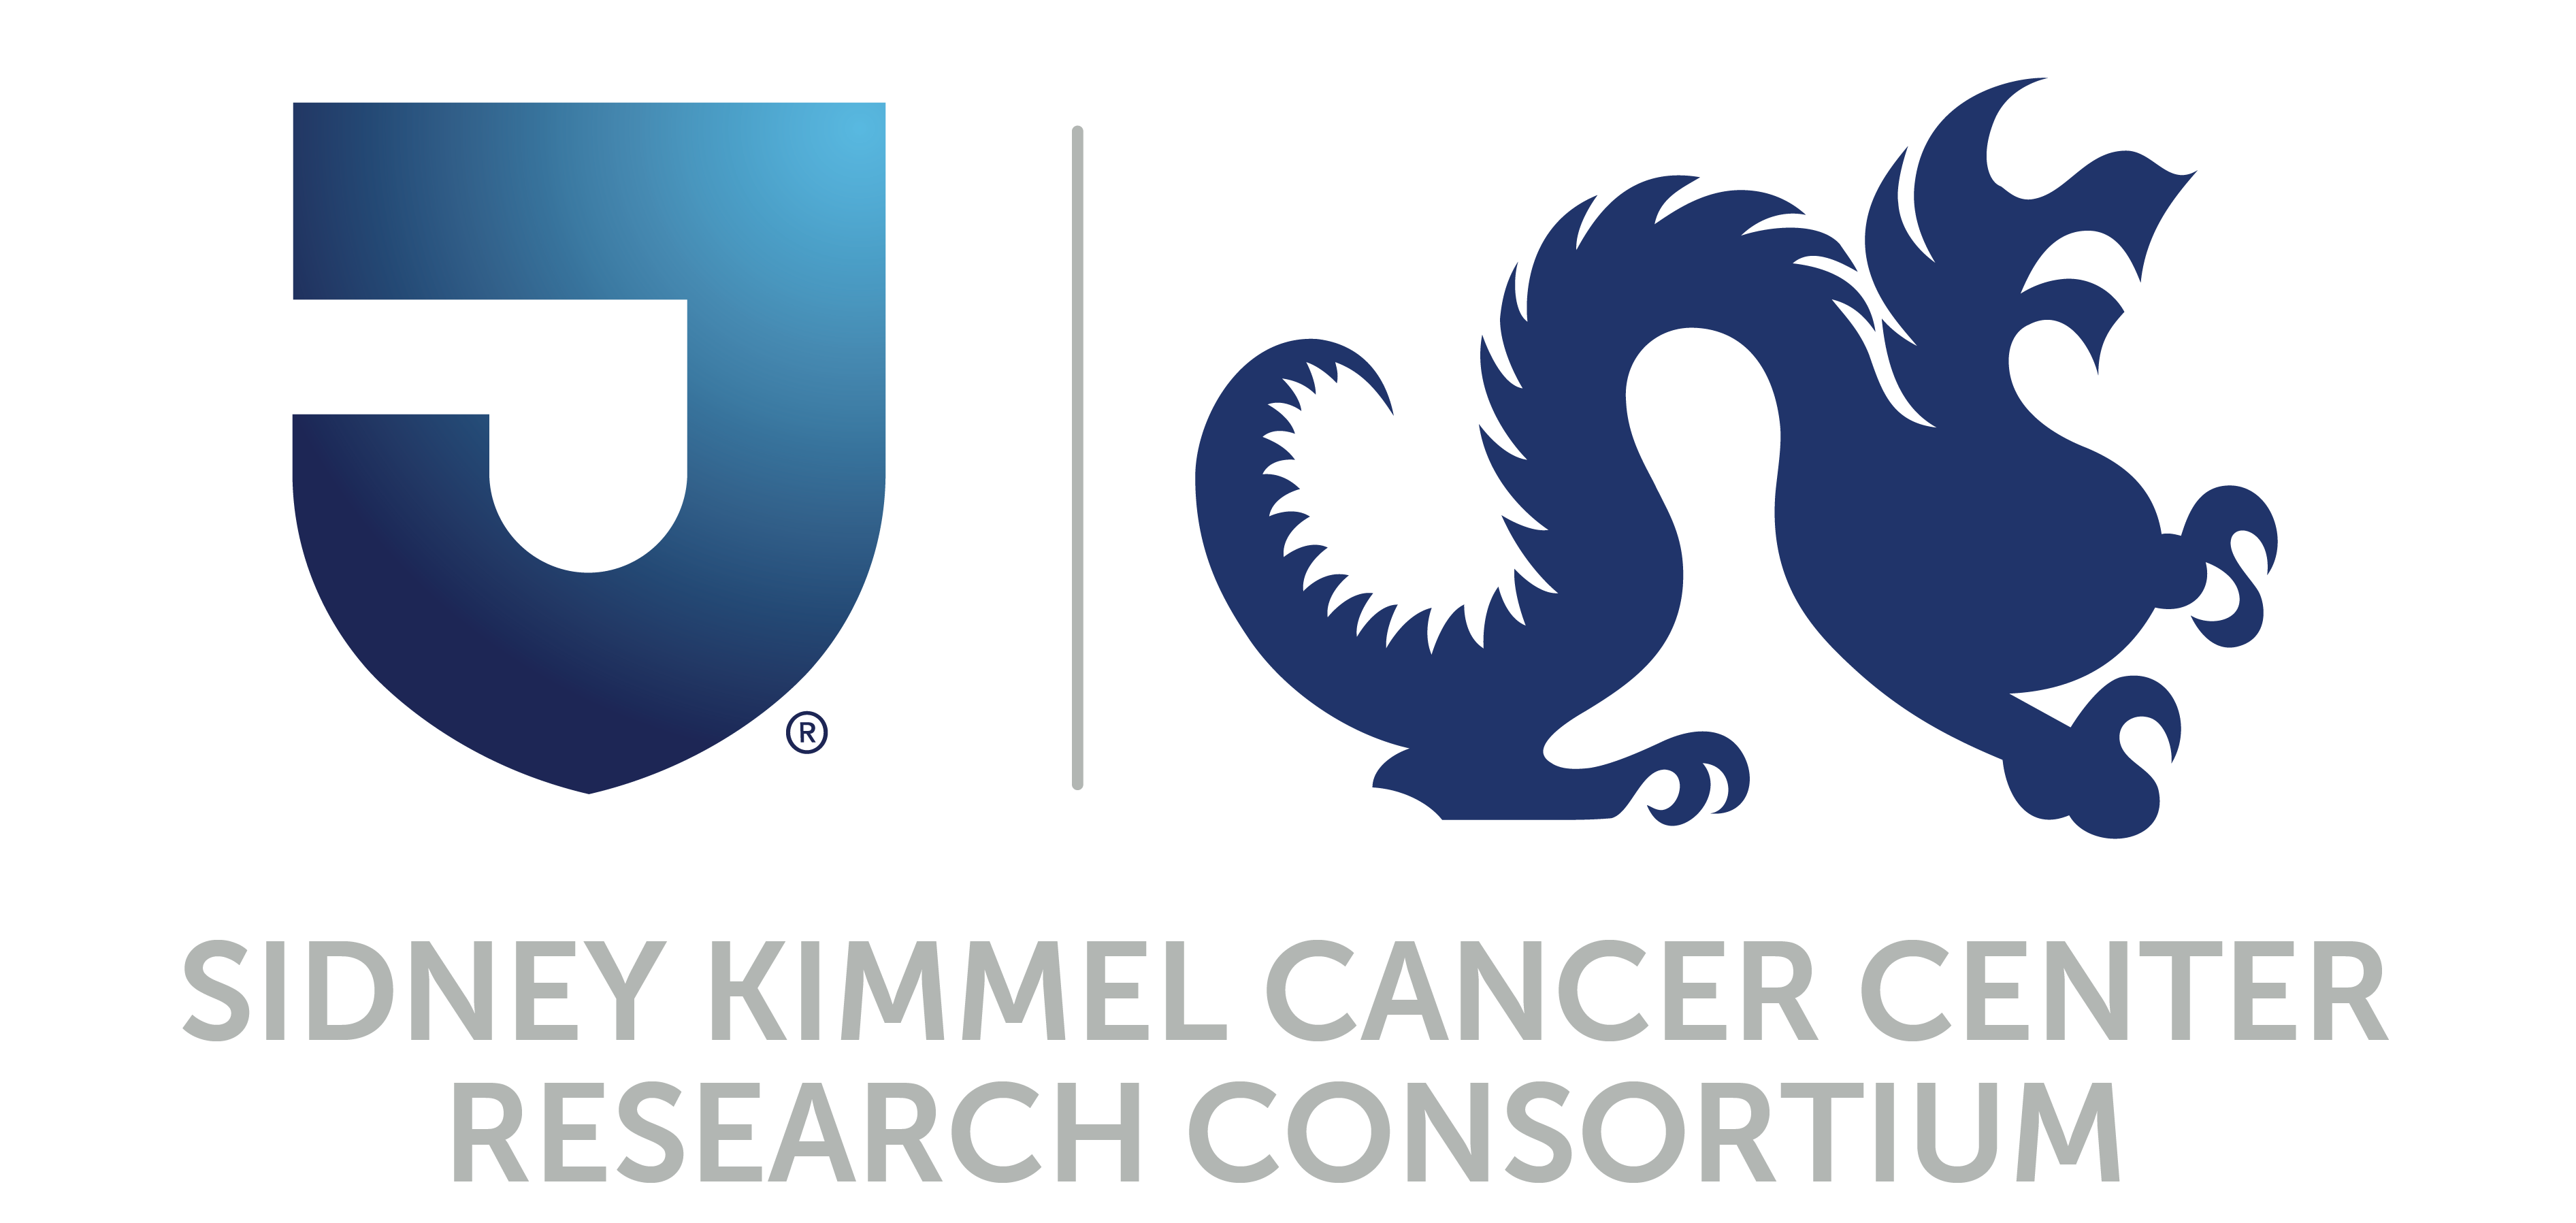 Sidney Kimmel Cancer Center at Jefferson